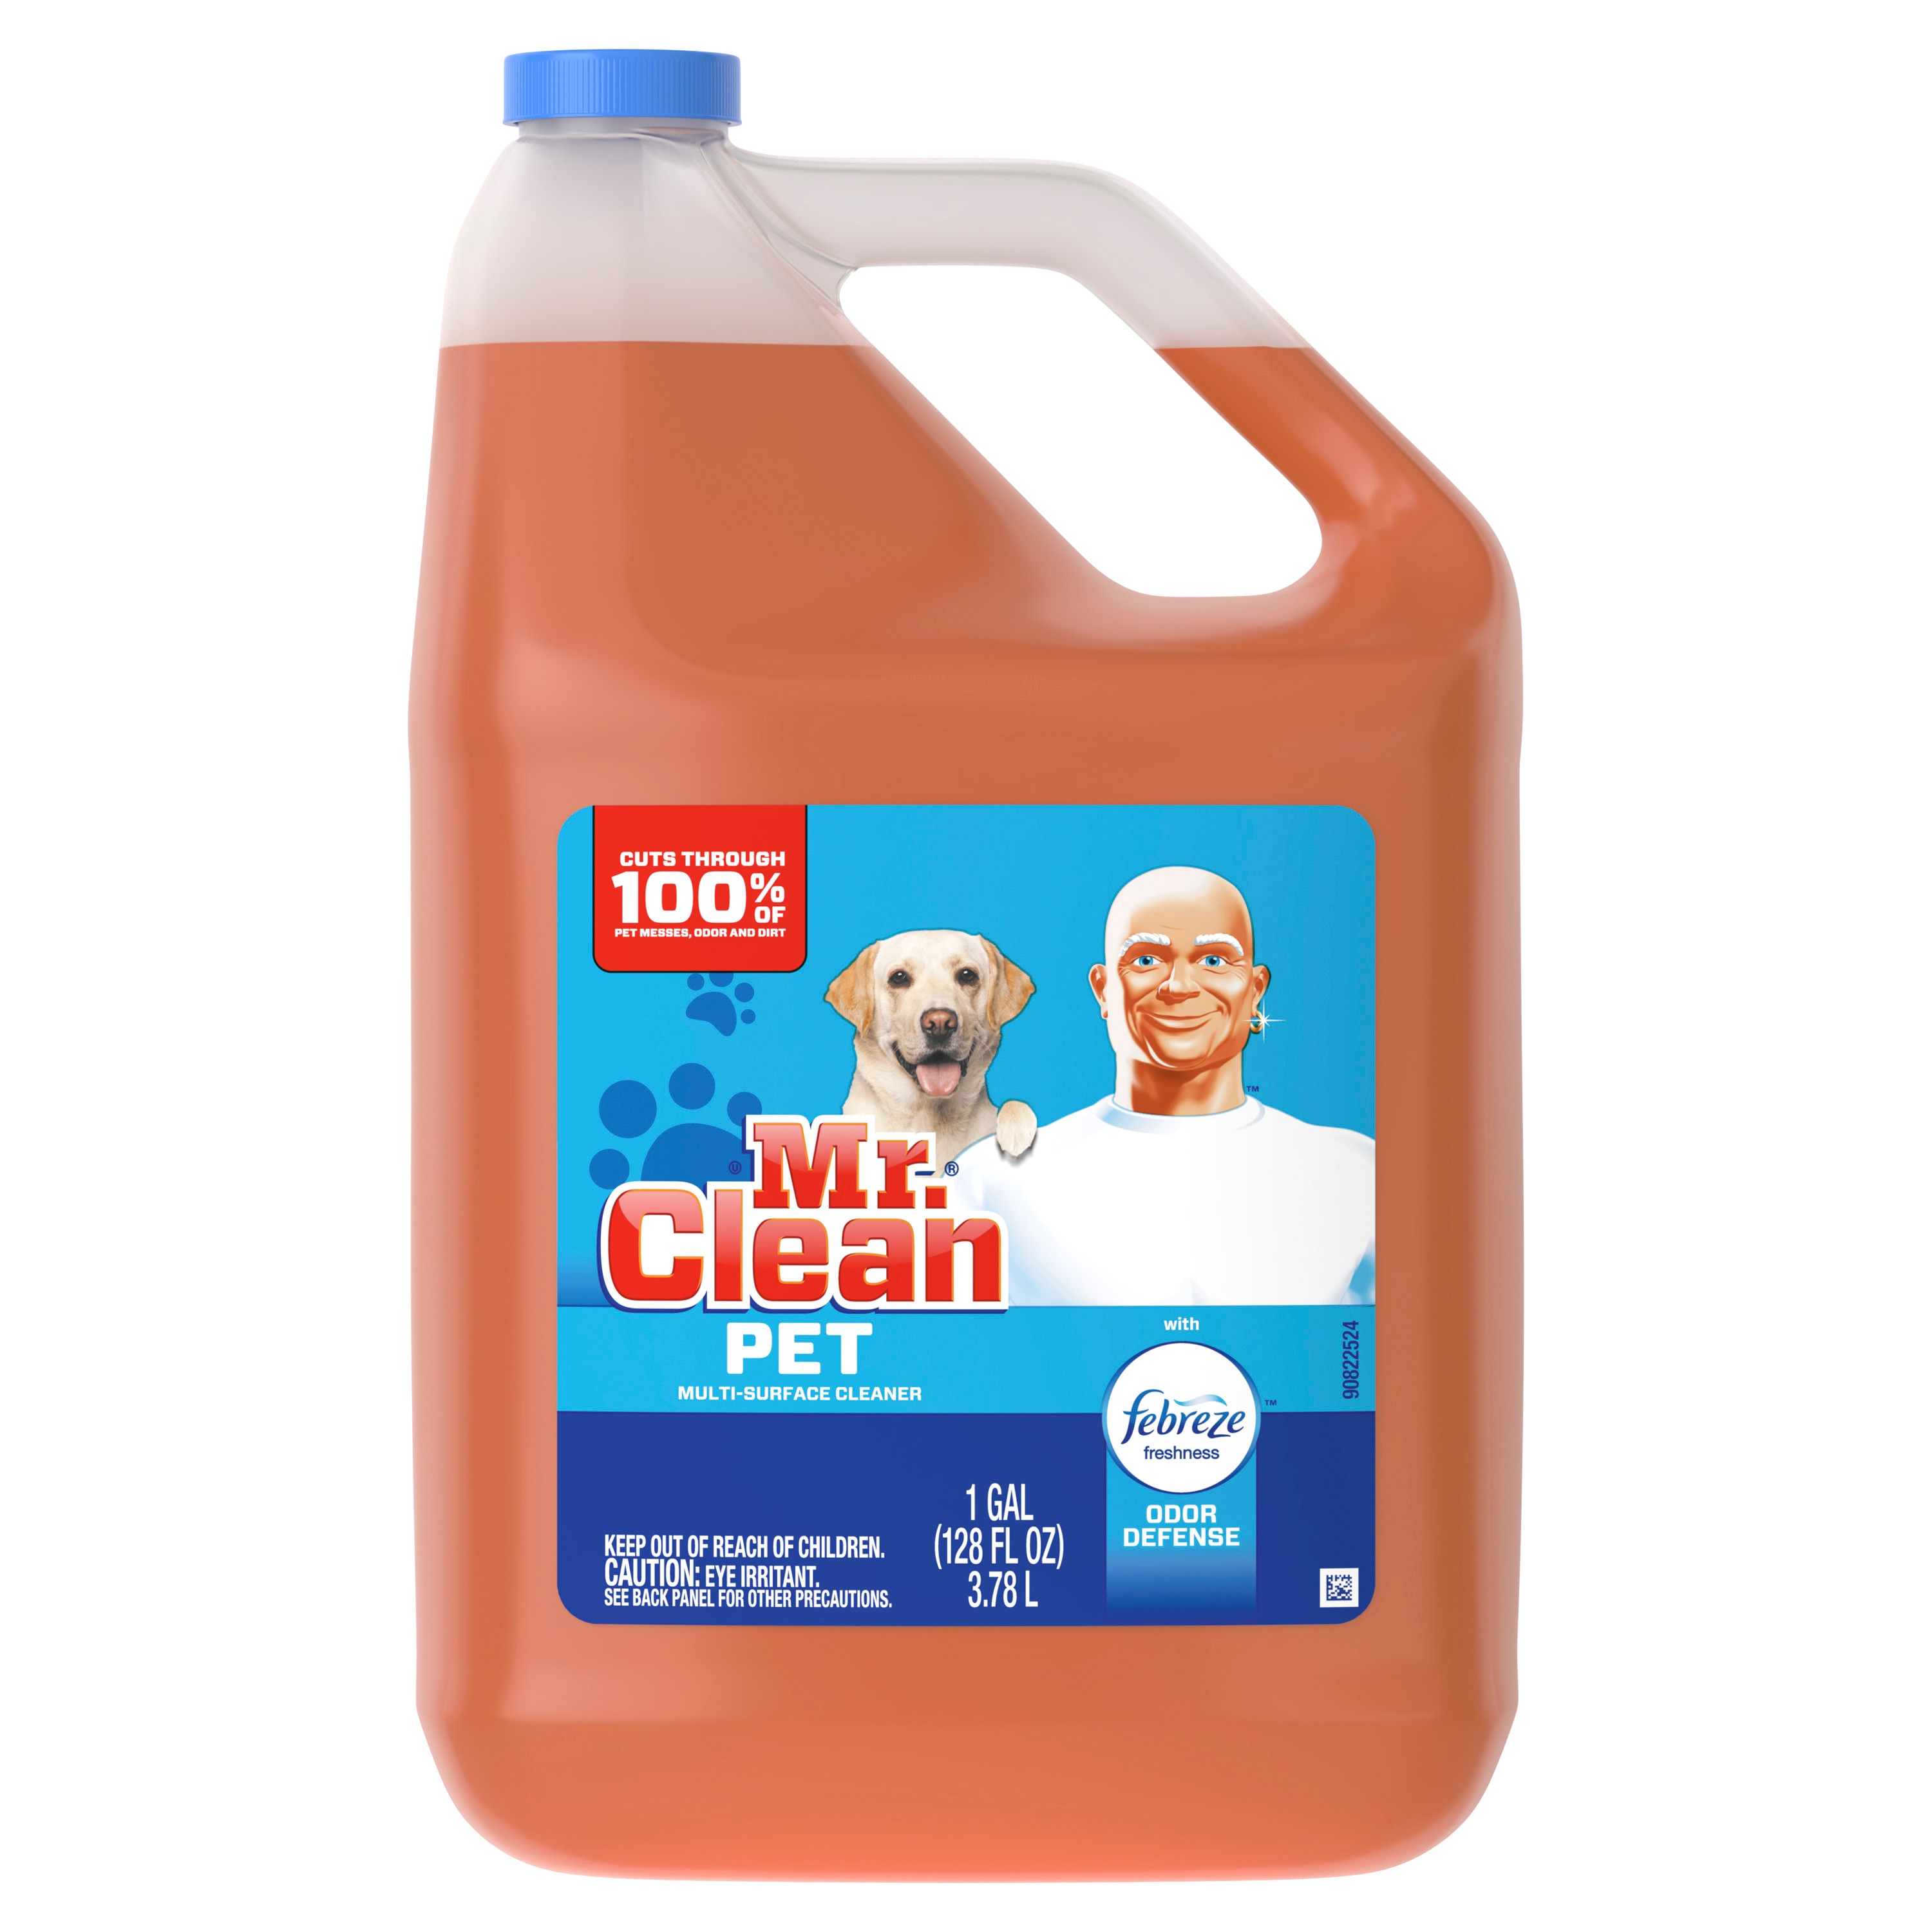 Clean Pet.